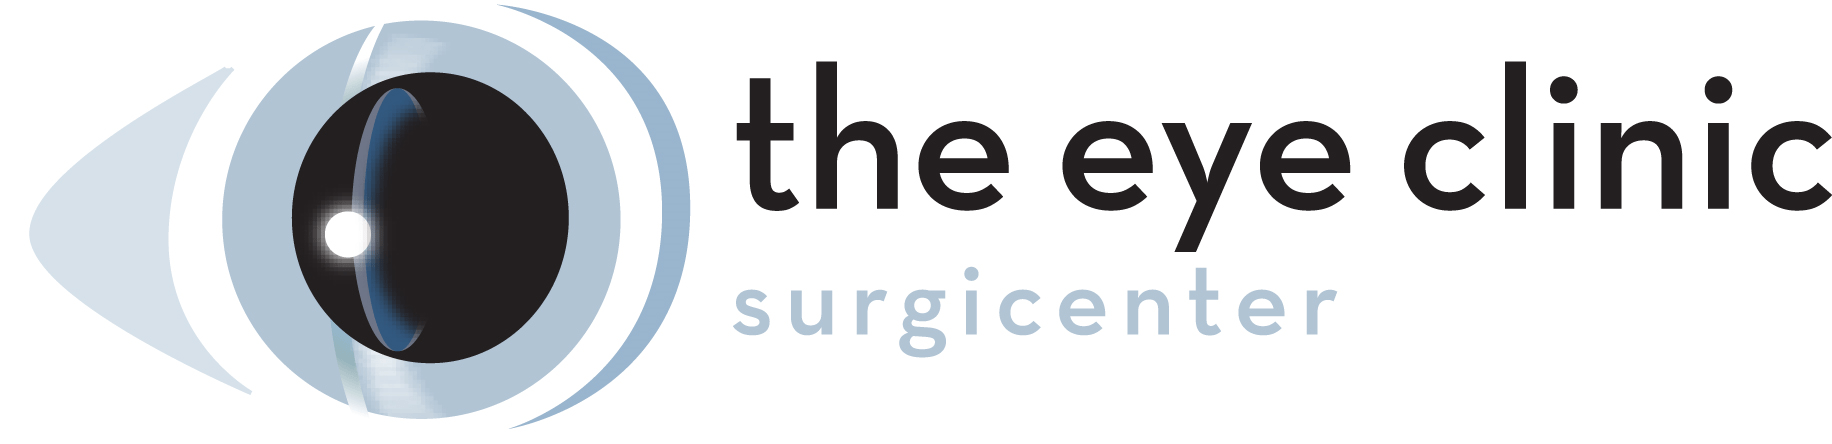 Eye Clinic Surgicenter Logo